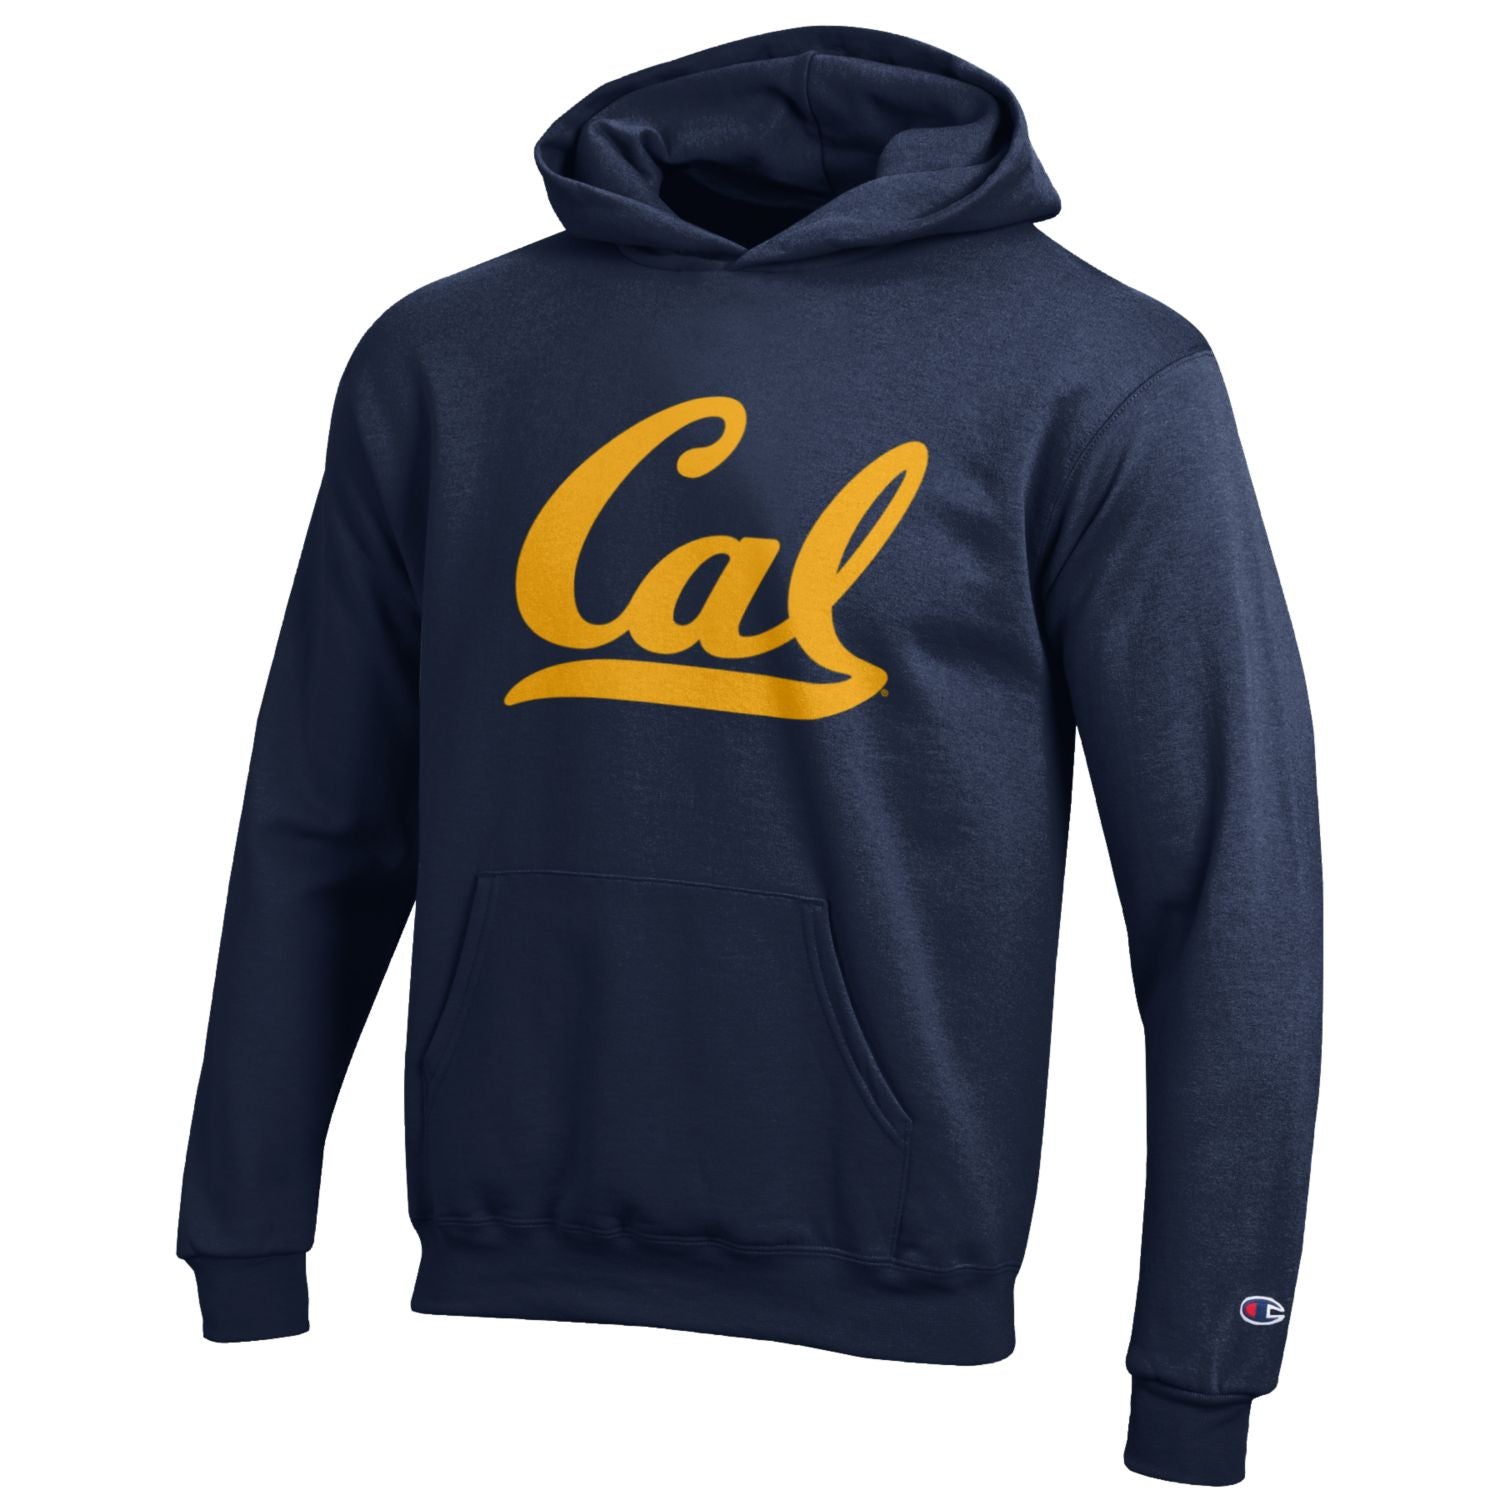 UC Berkeley Cal Champion Youth Hoodie 